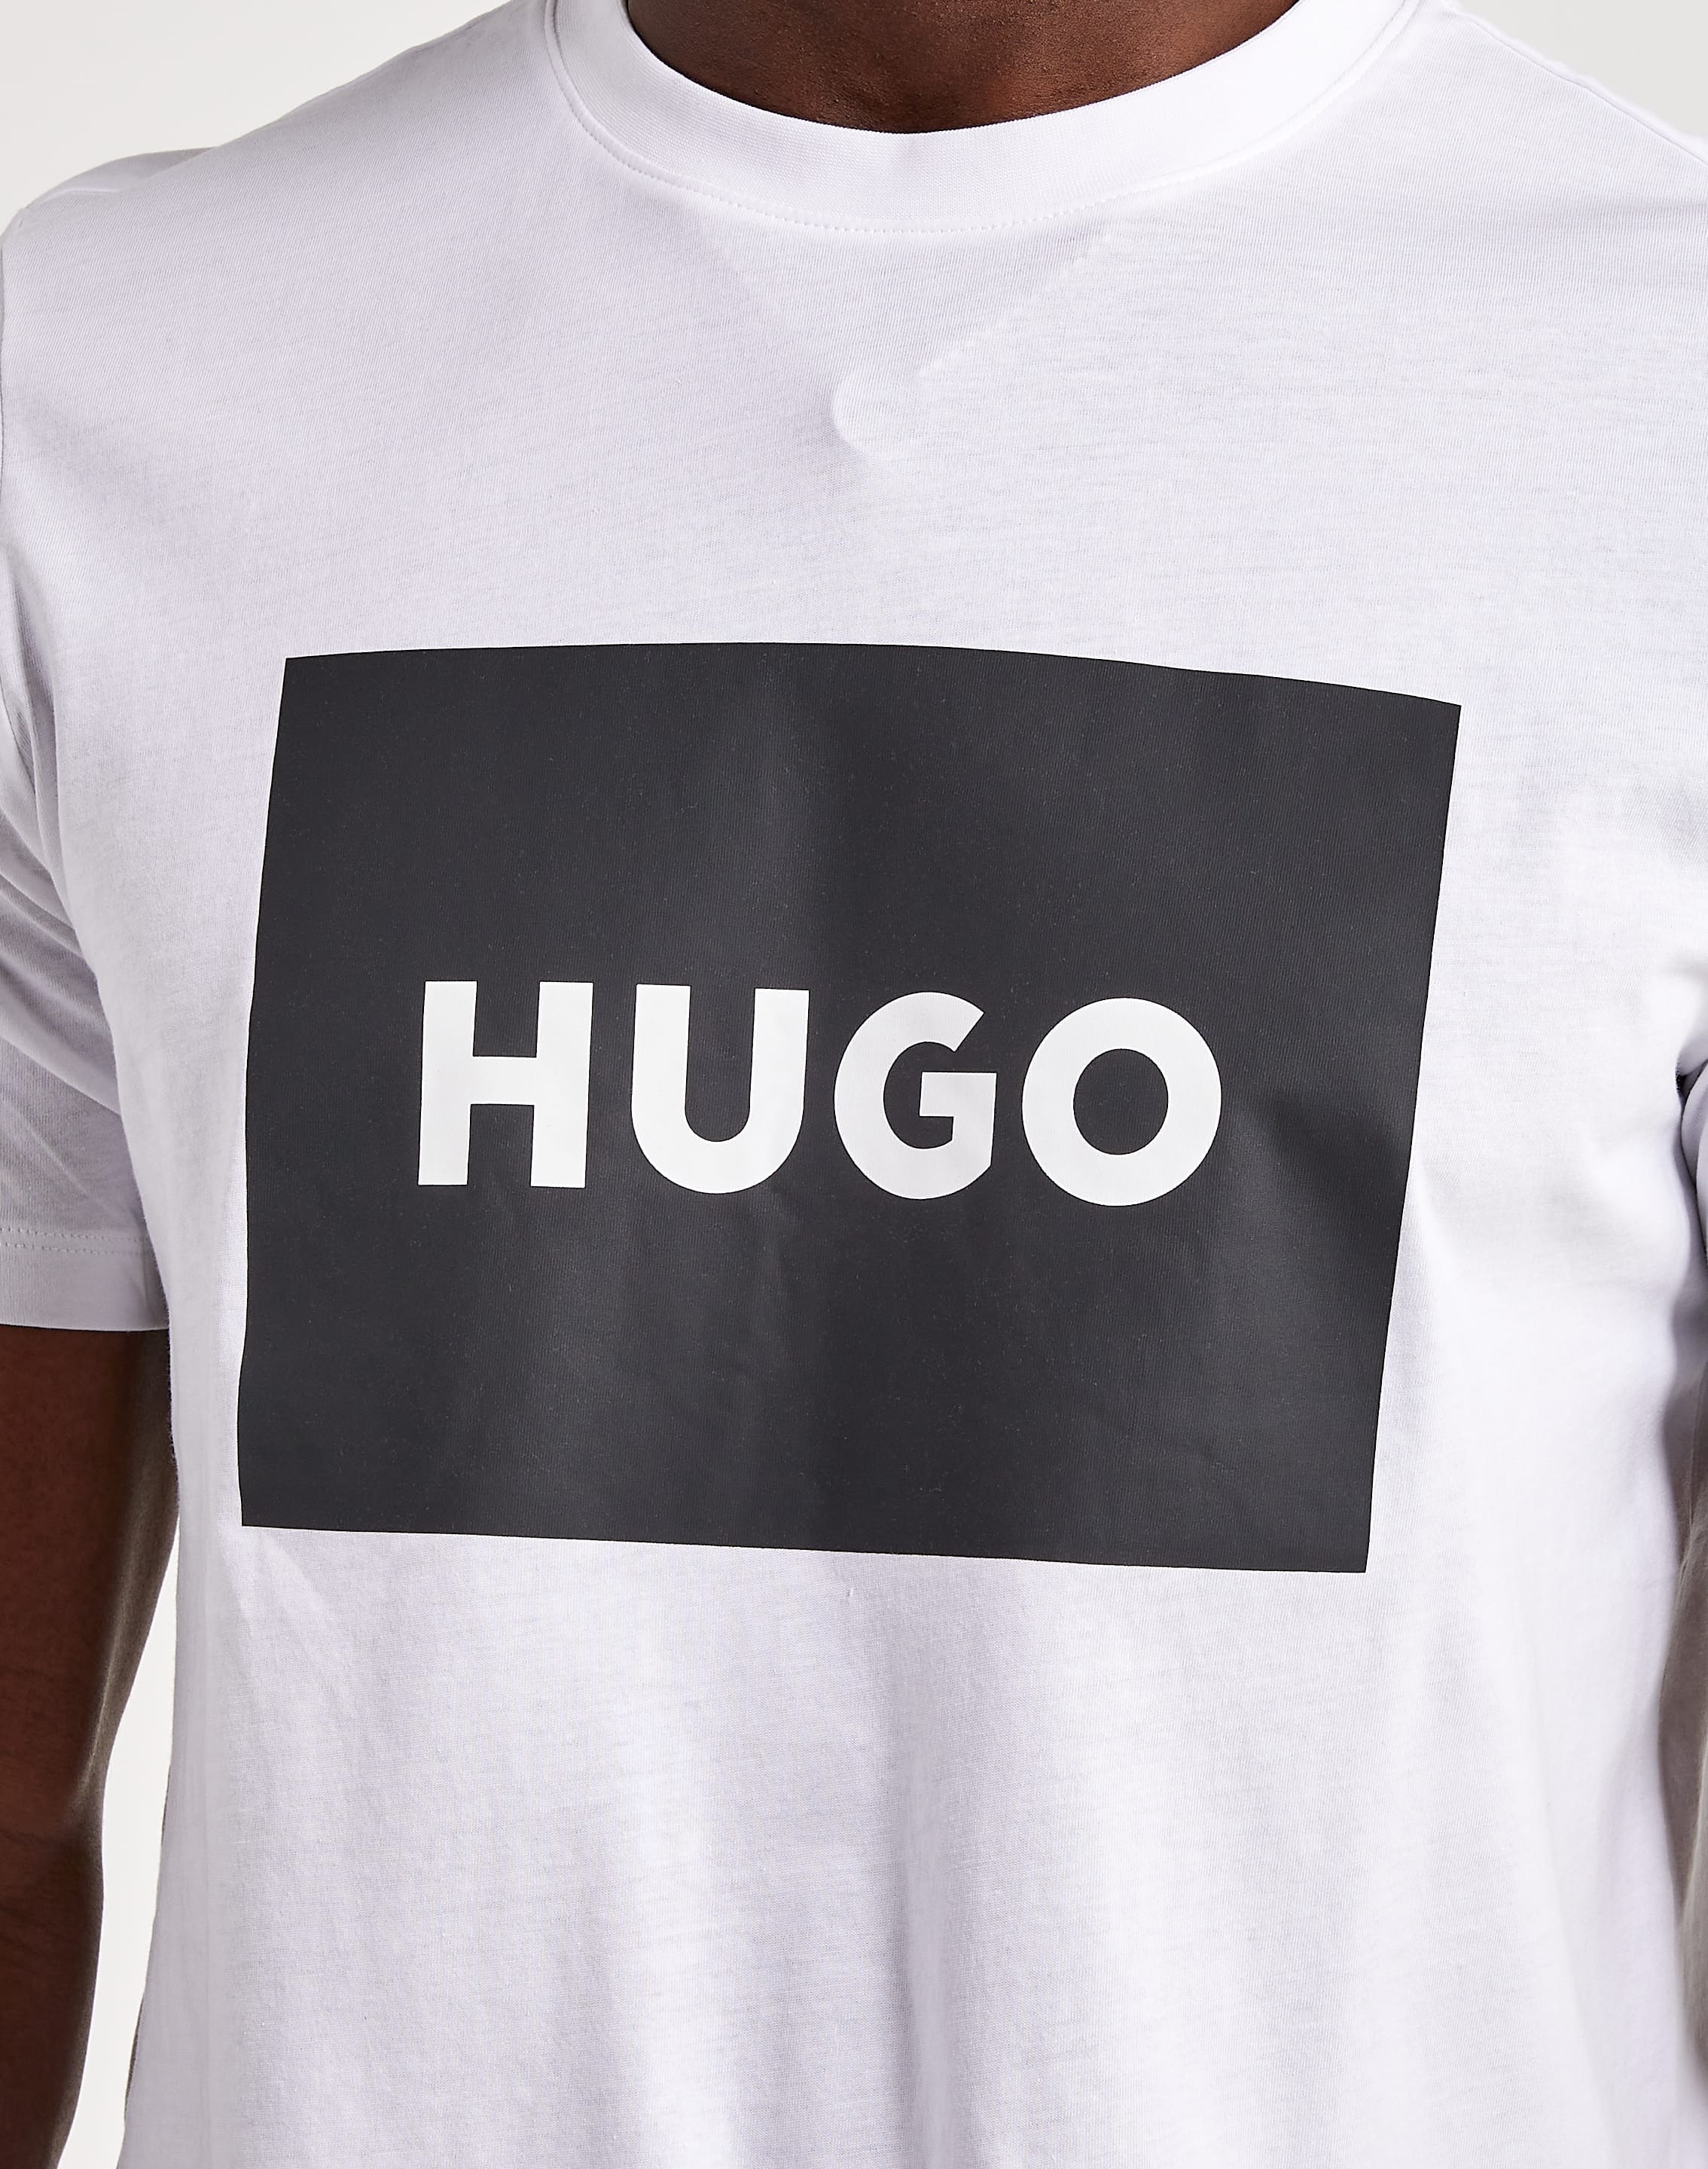 Hugo – DTLR Tee Box Logo